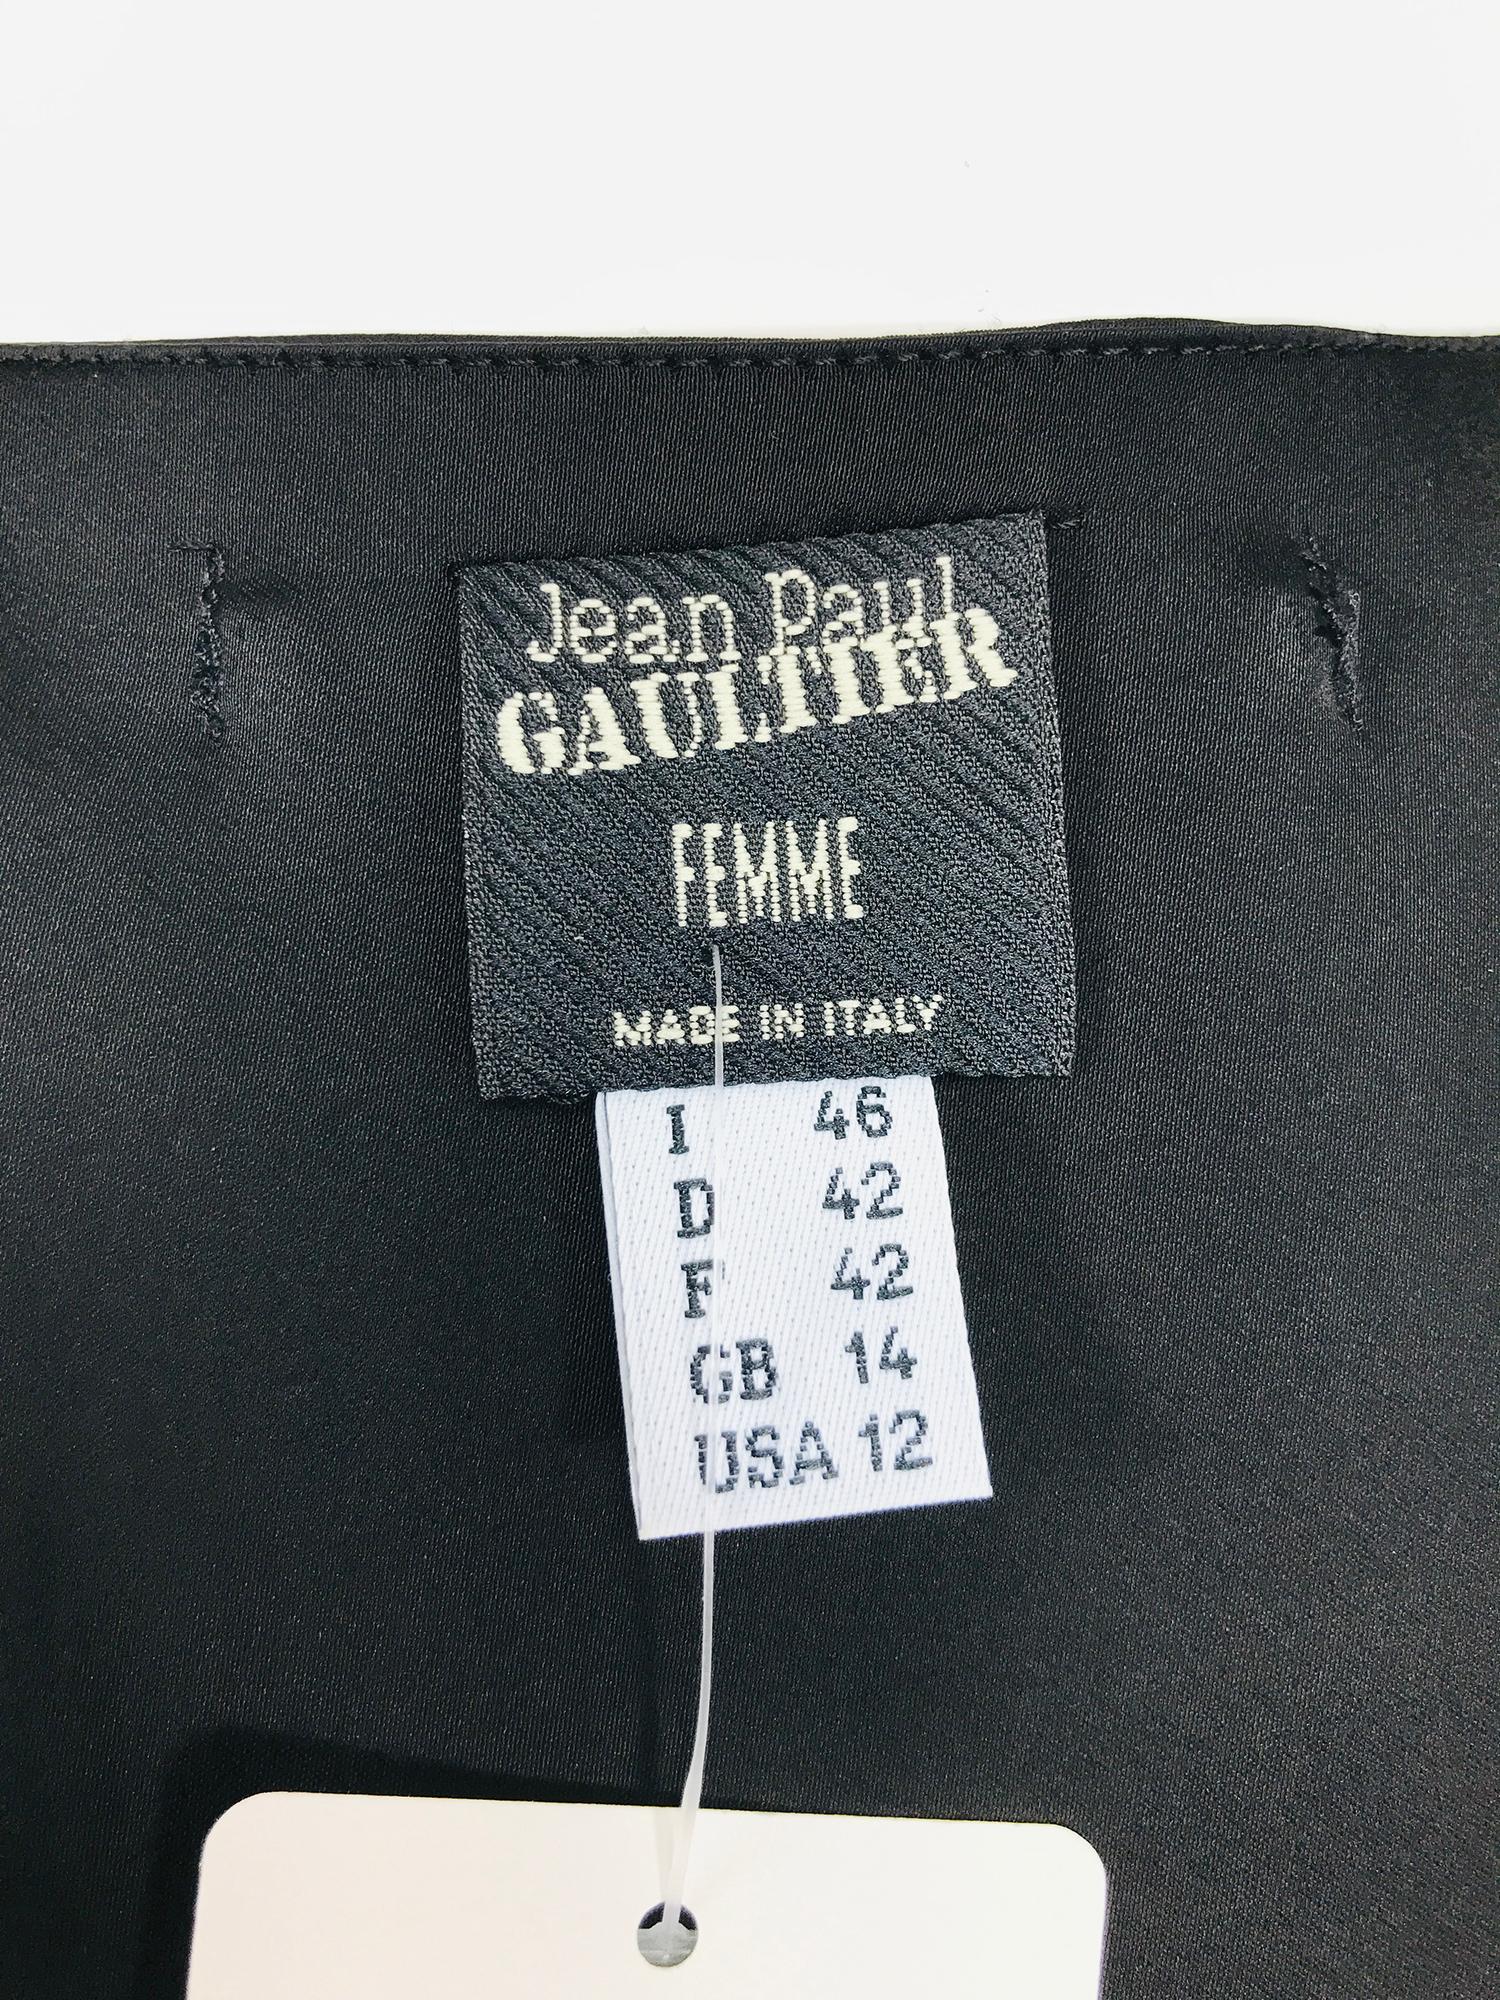 Jean Paul Gaultier Femme Tie Front Floral Vest Back Top 3